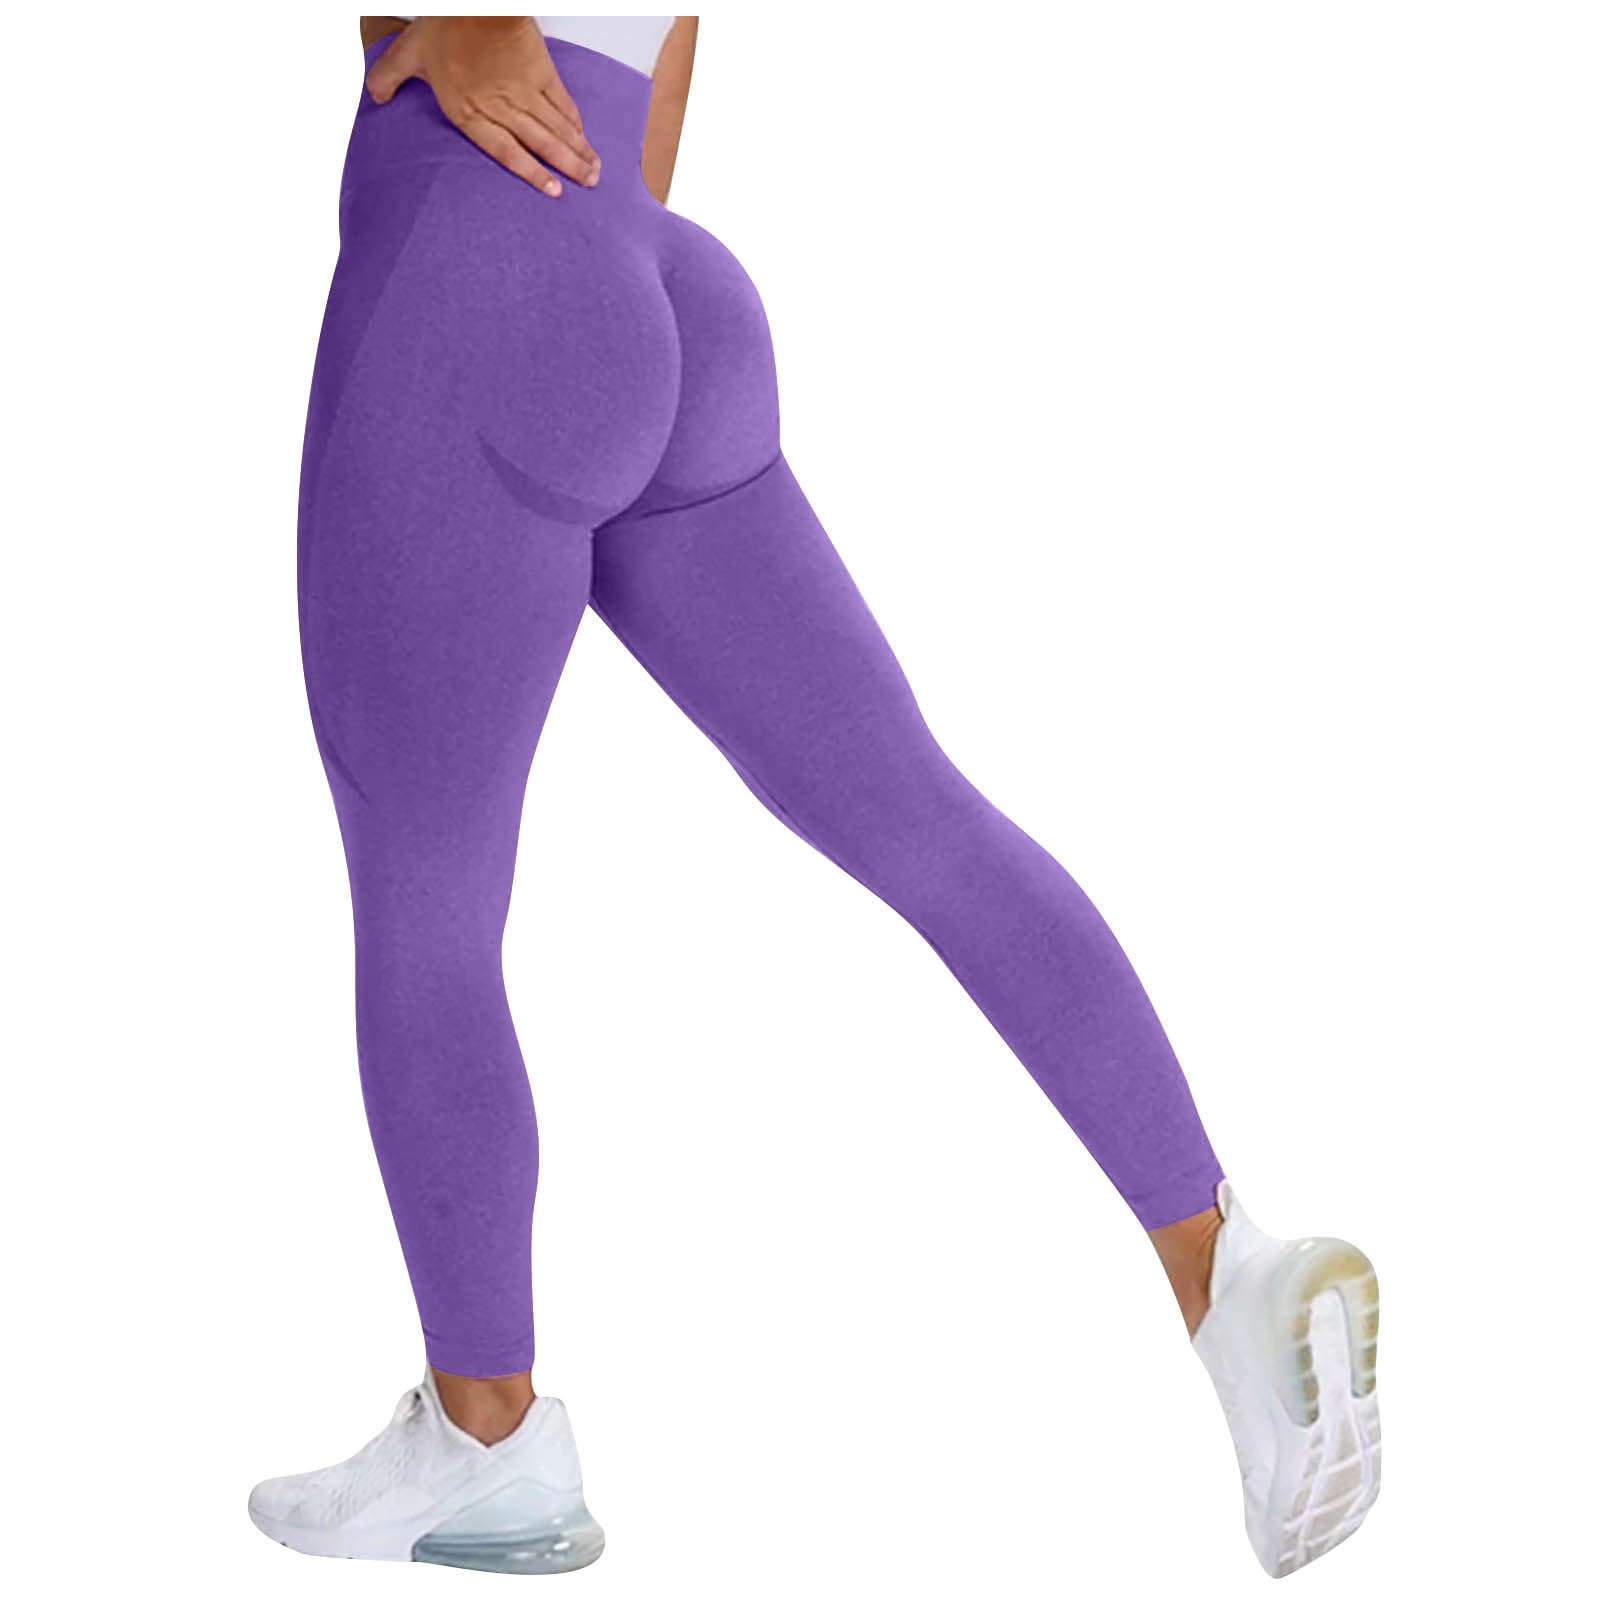 womens purple dress shorts Hot Sale - OFF 60%